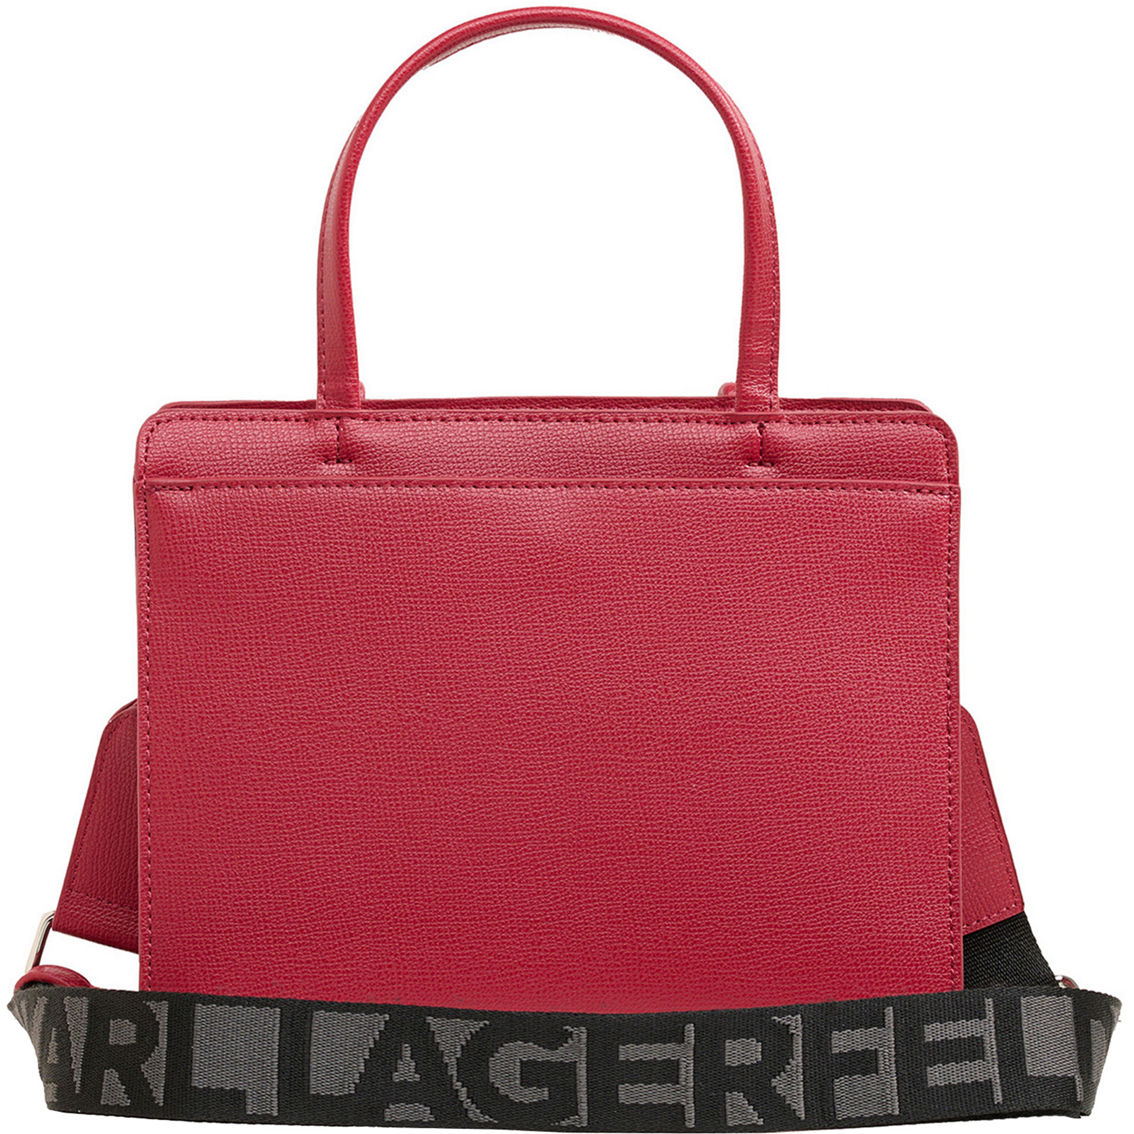 Karl Lagerfeld Maybelle Satchel, Red Logo - Image 2 of 4